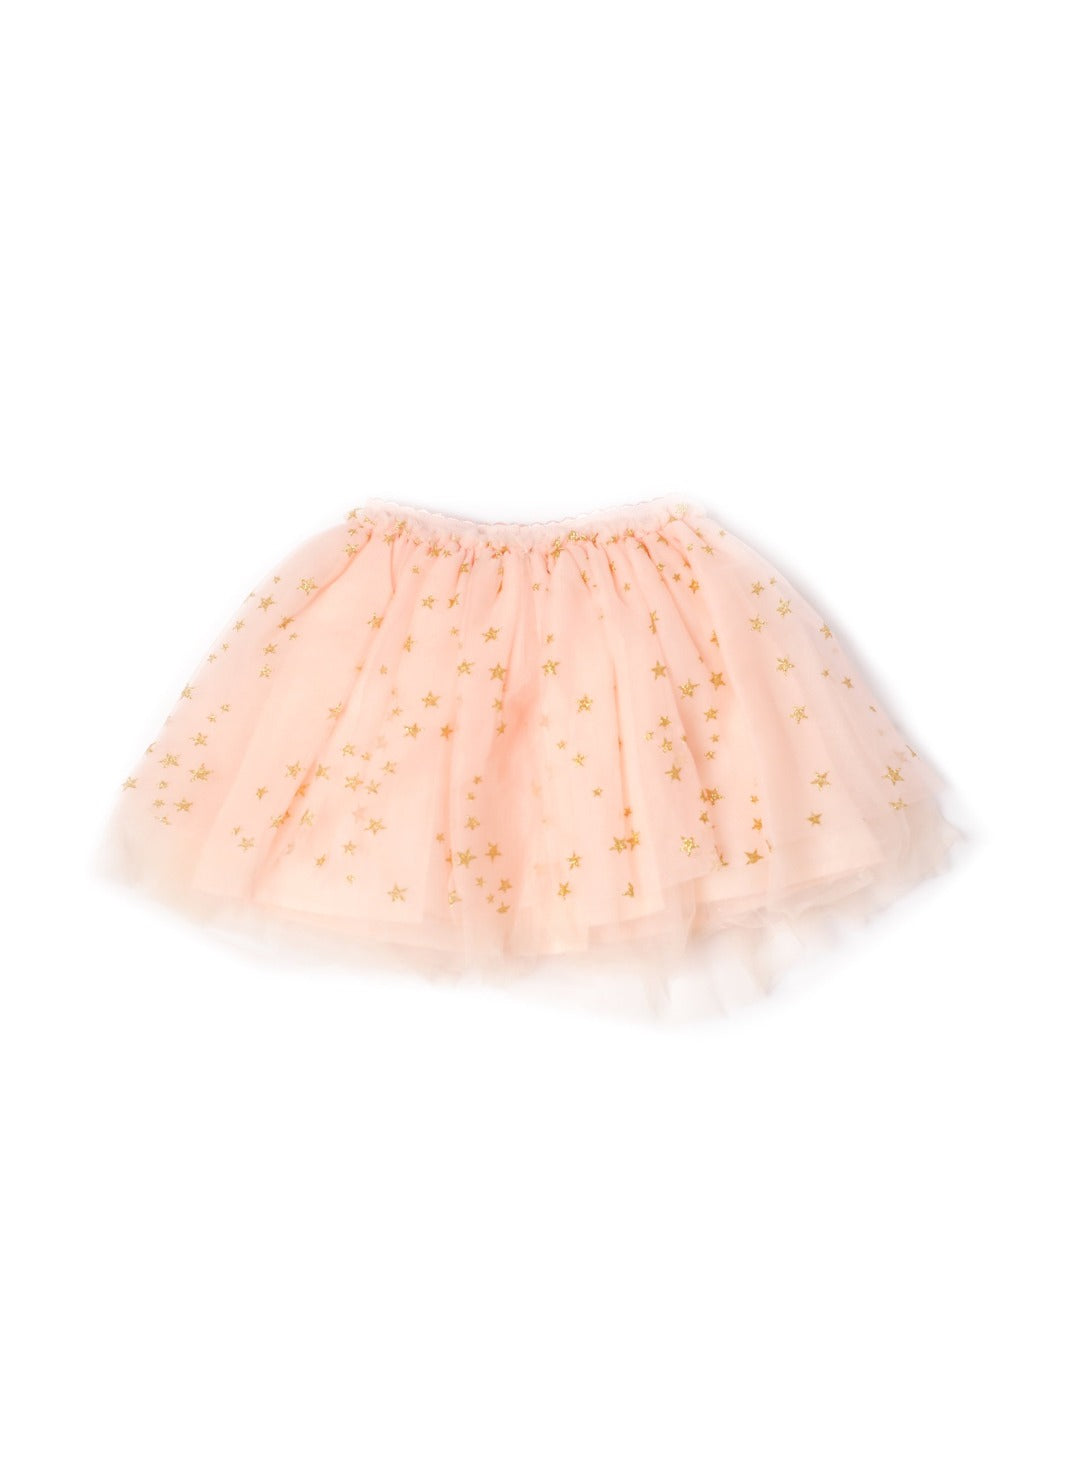 pink tutu skirt with sparkling stars